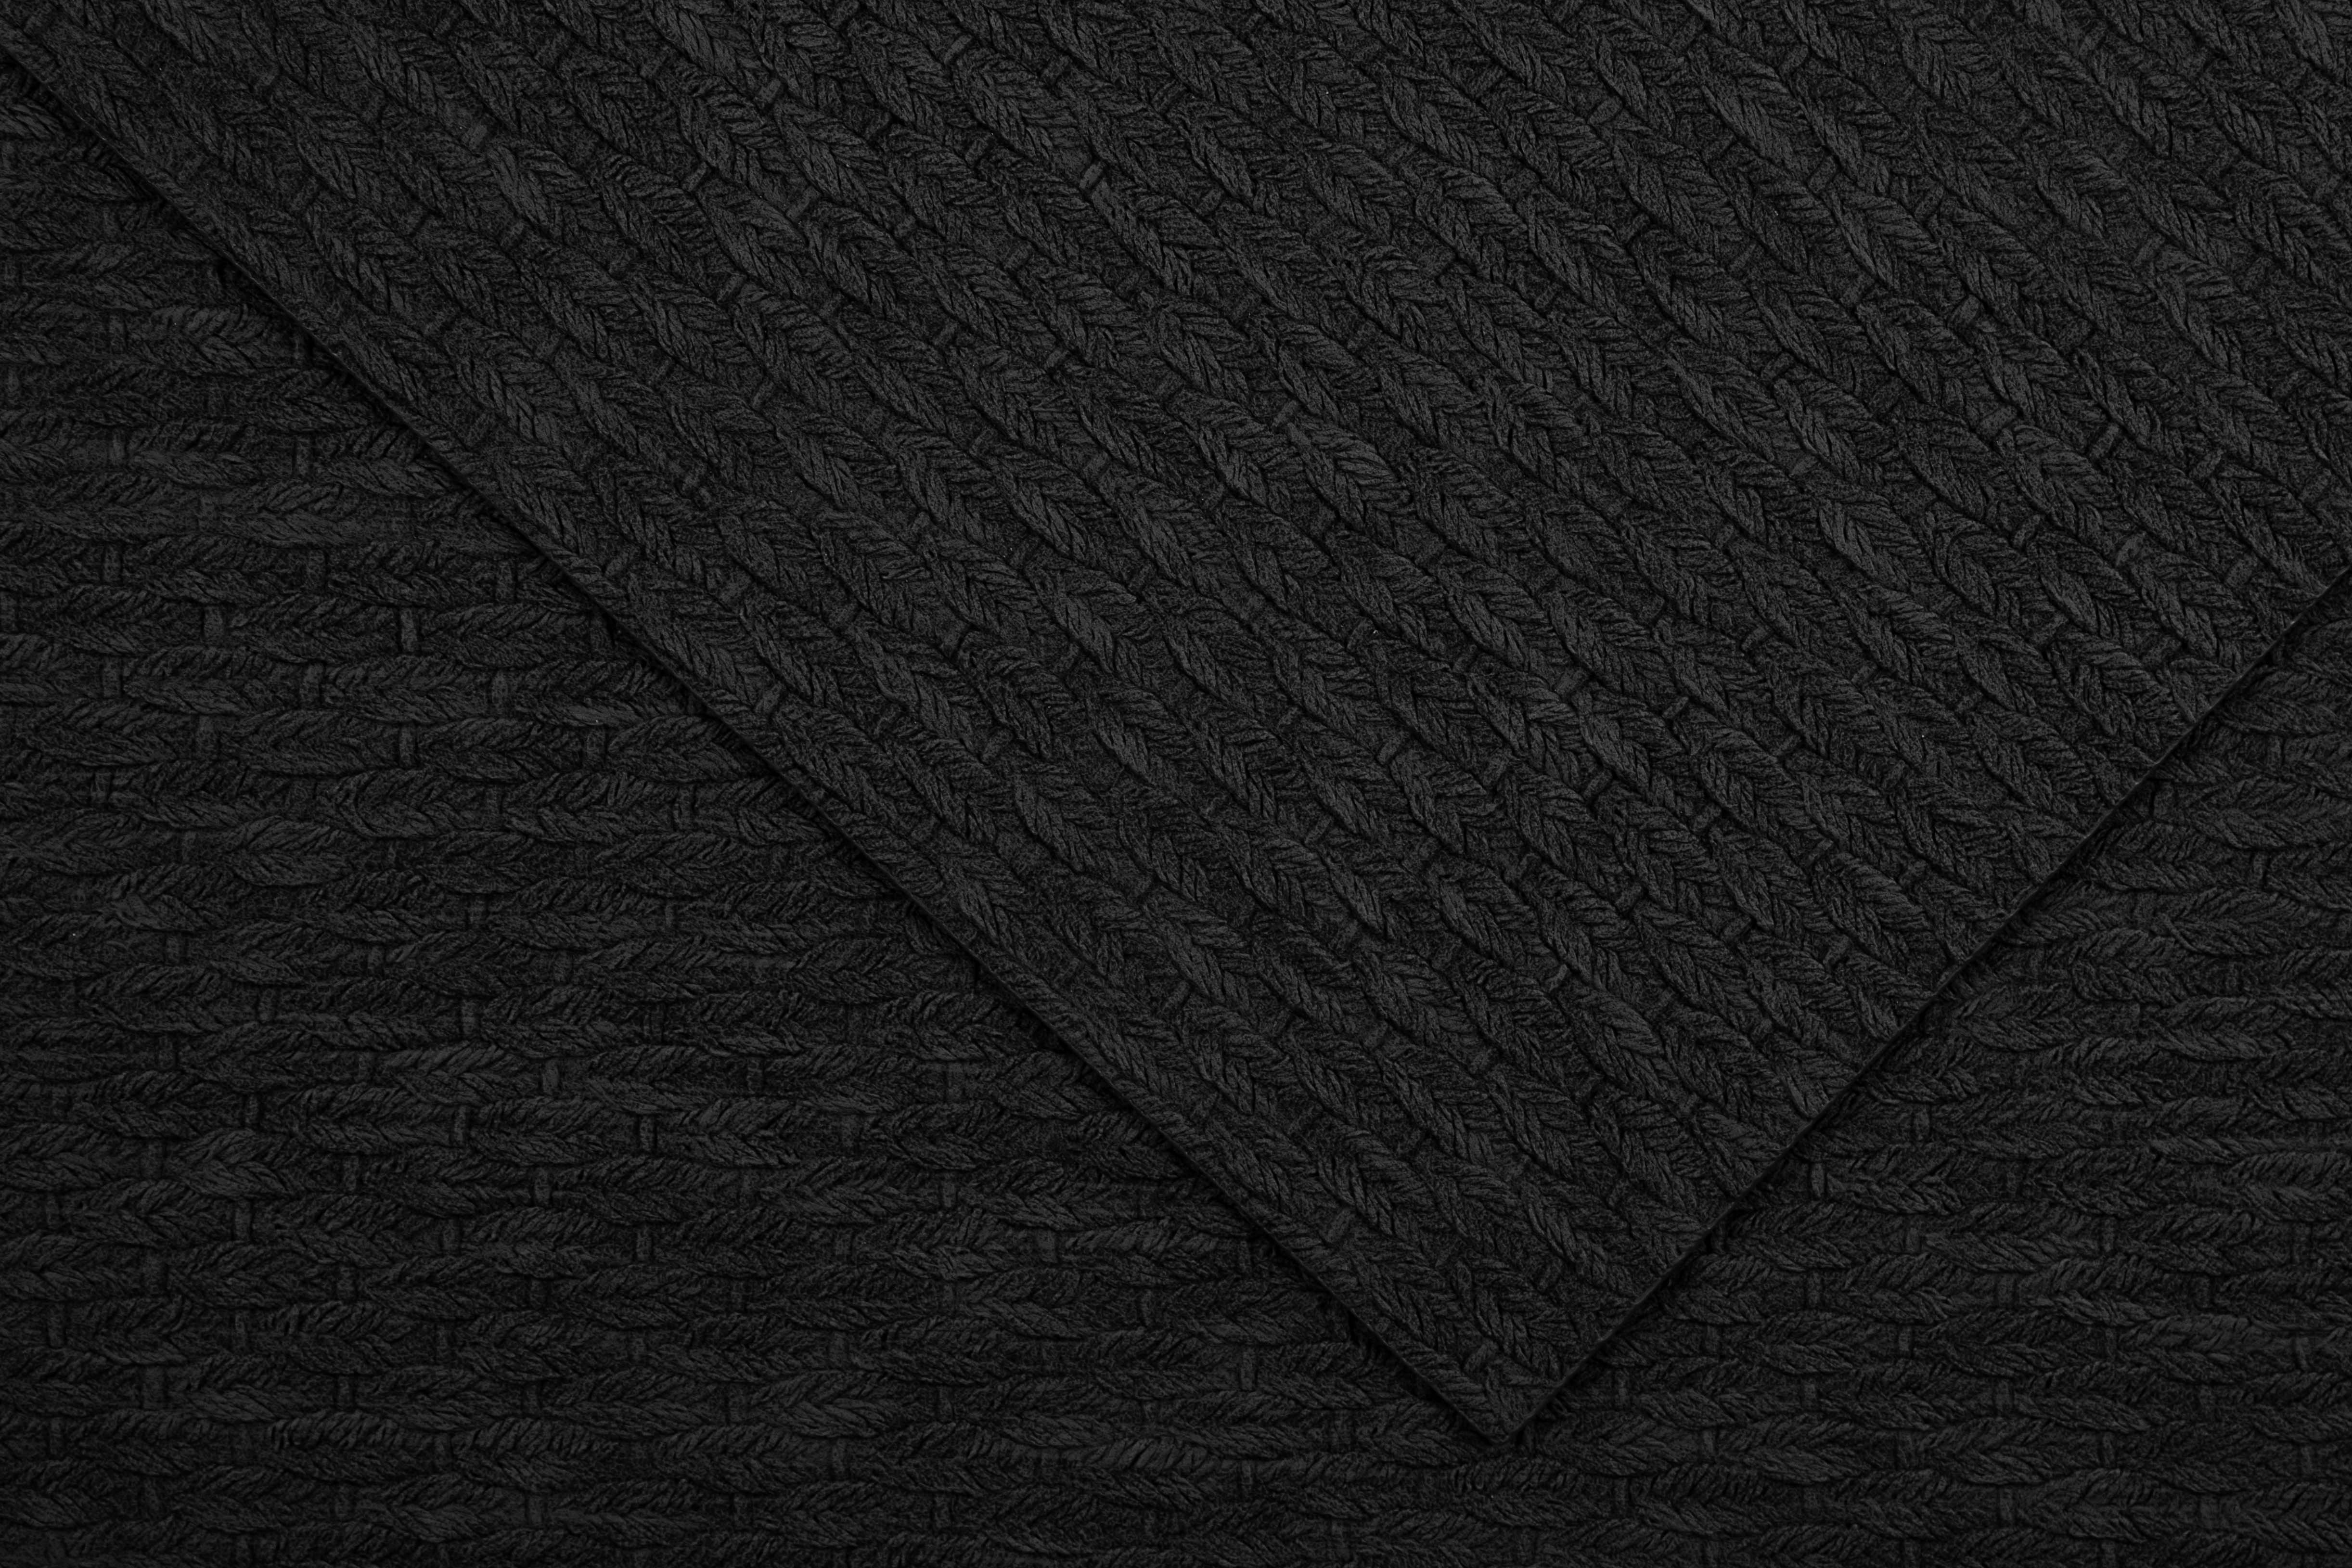 Placemat ARBIN - Leather look imitation- 45x33cm, black